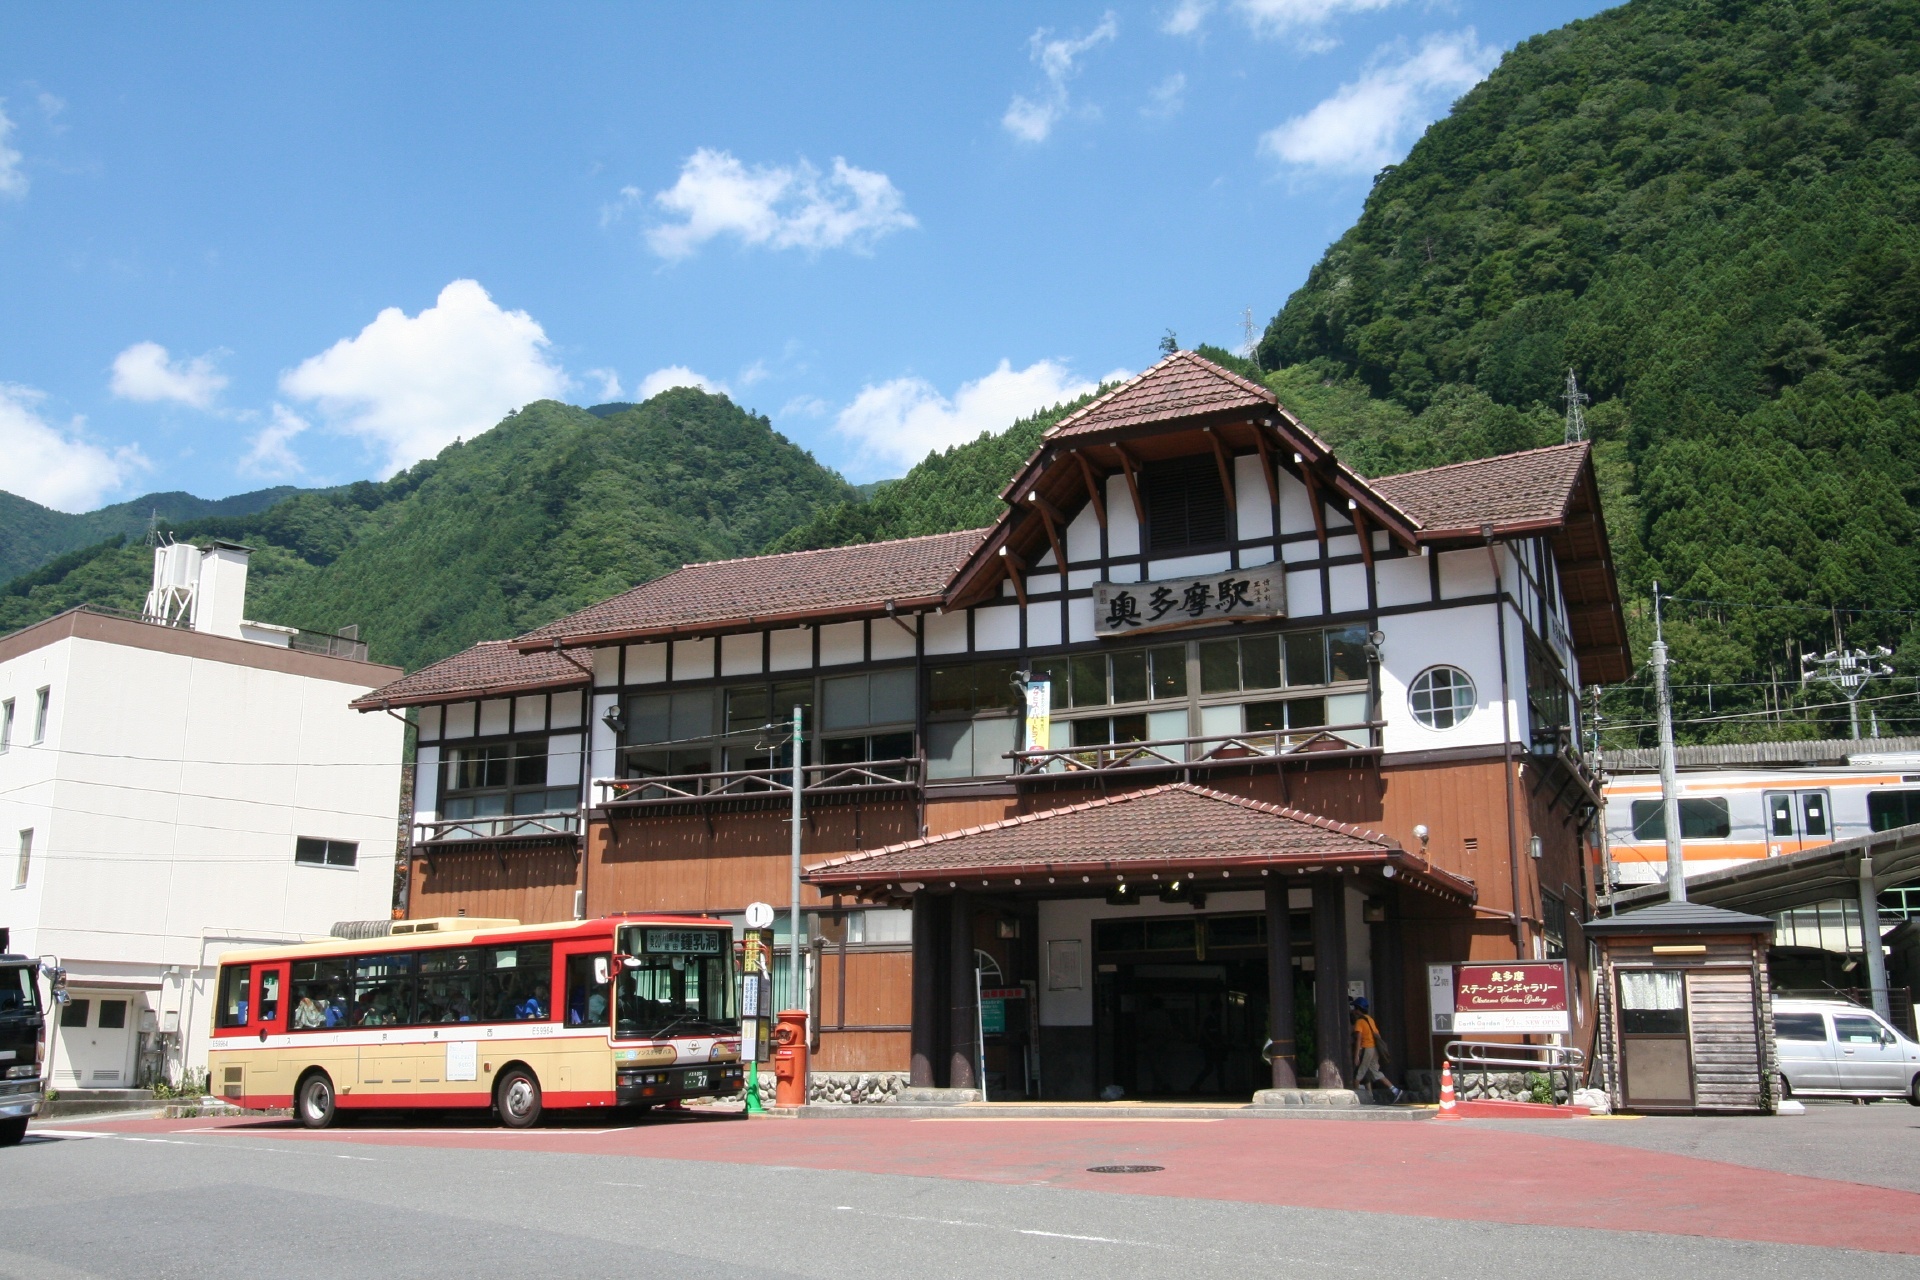 Okutama station in summer